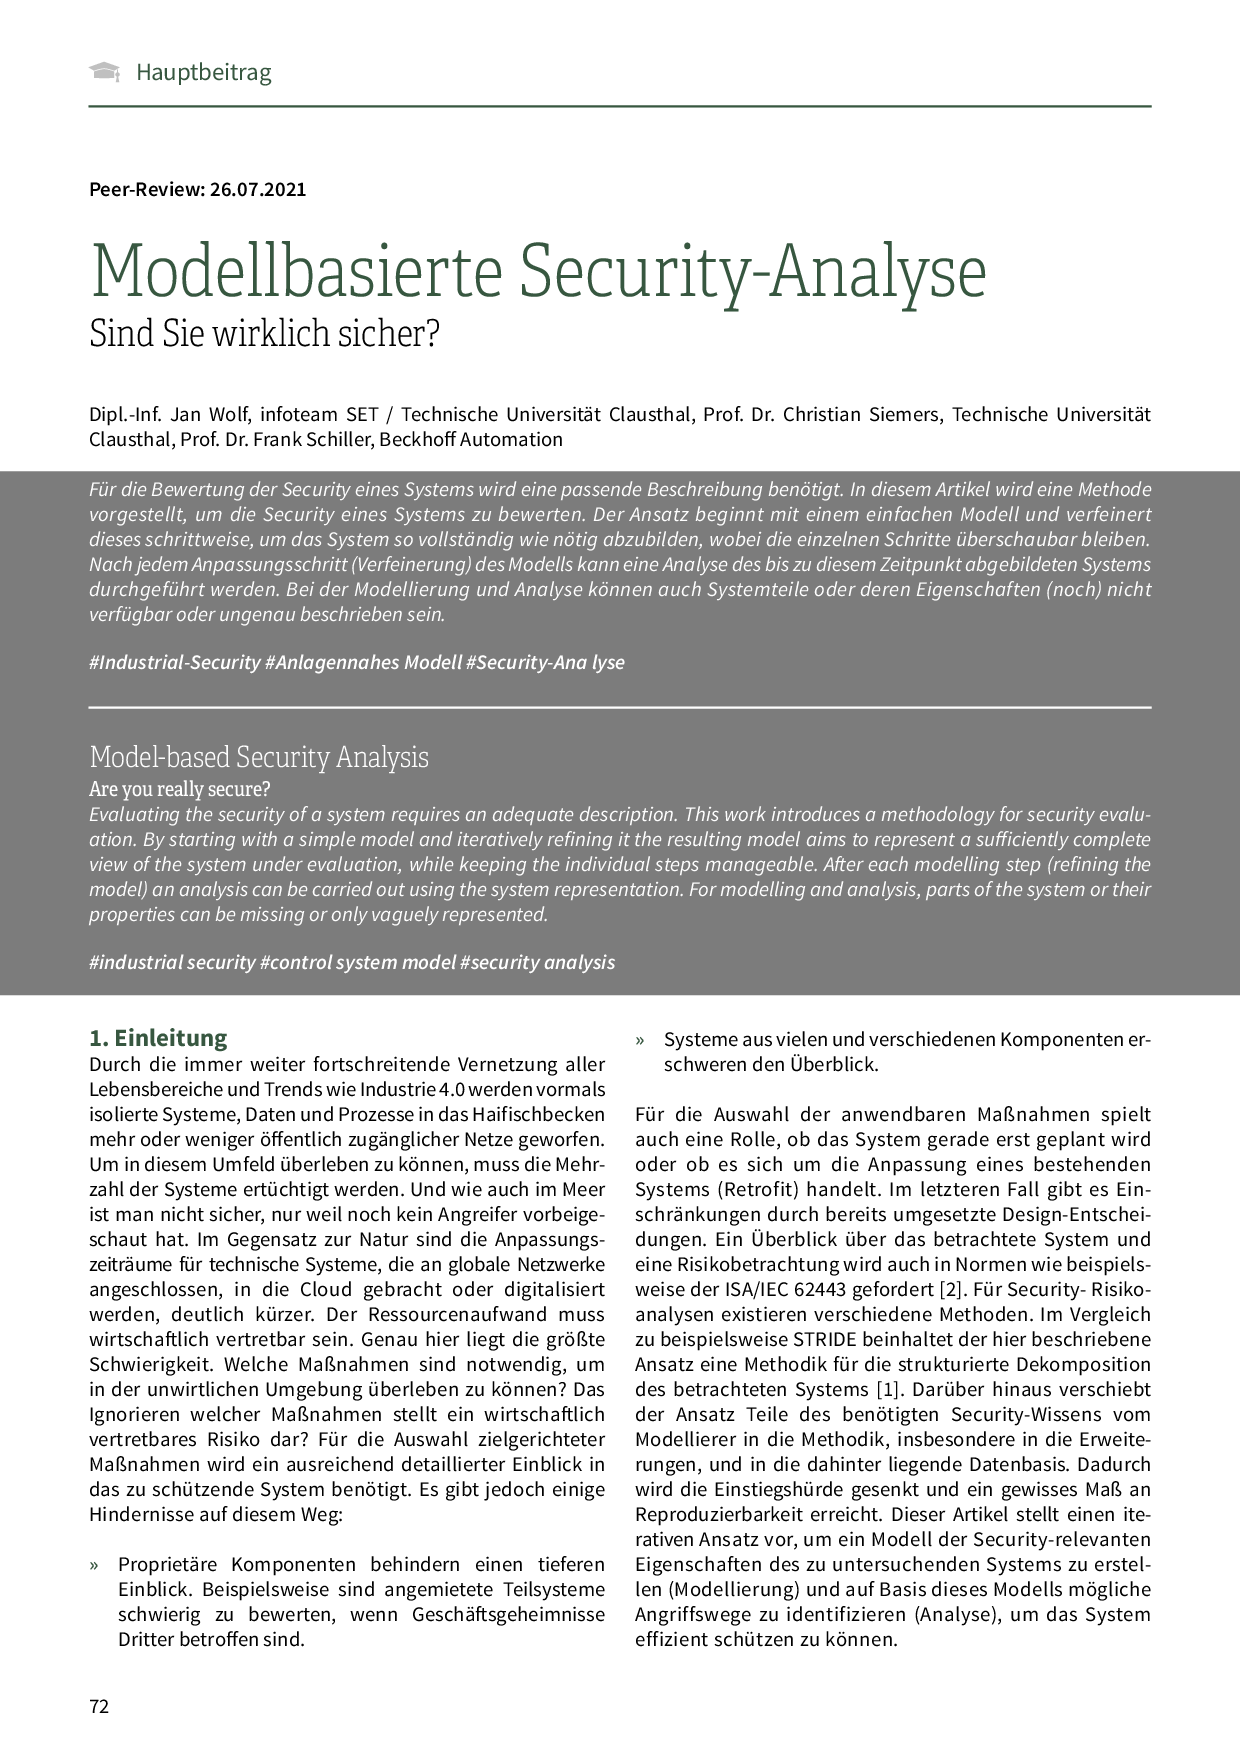 Modellbasierte Security-Analyse